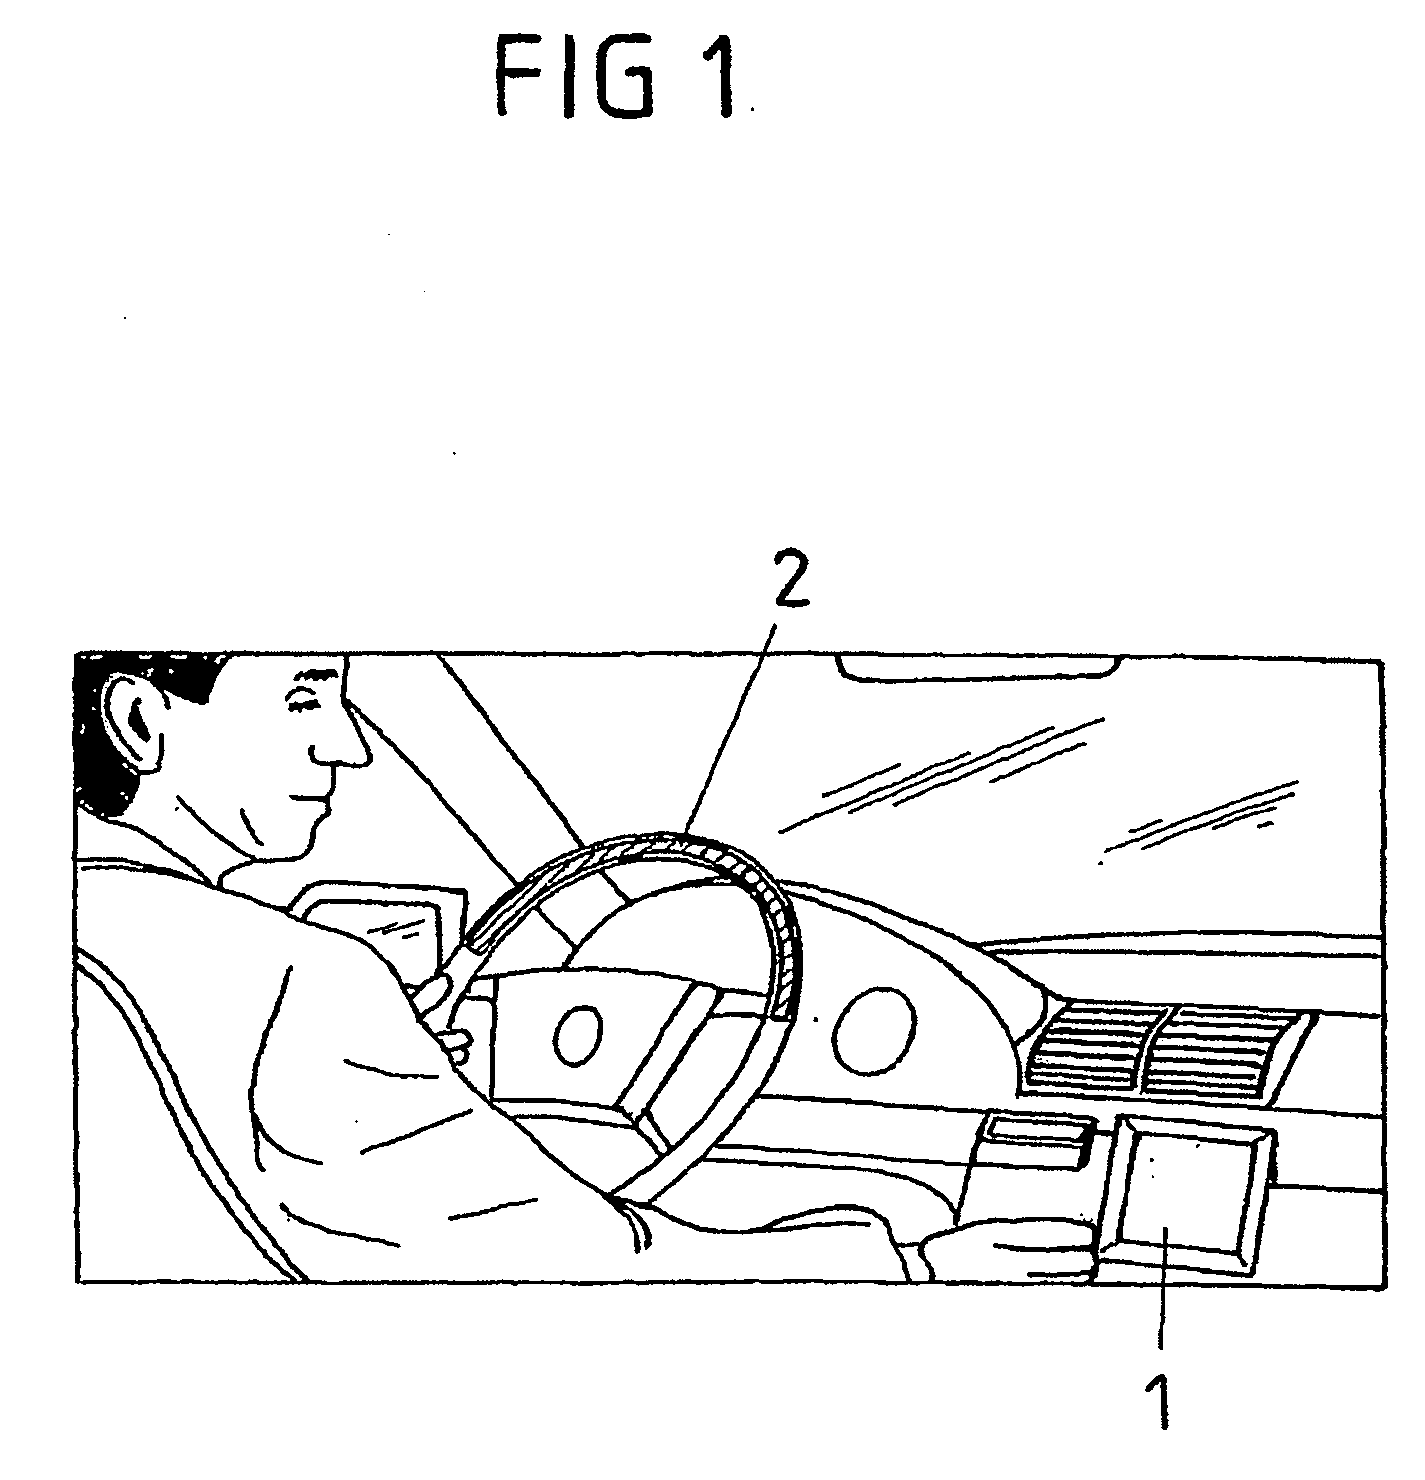 Steering wheel for motor vehicles